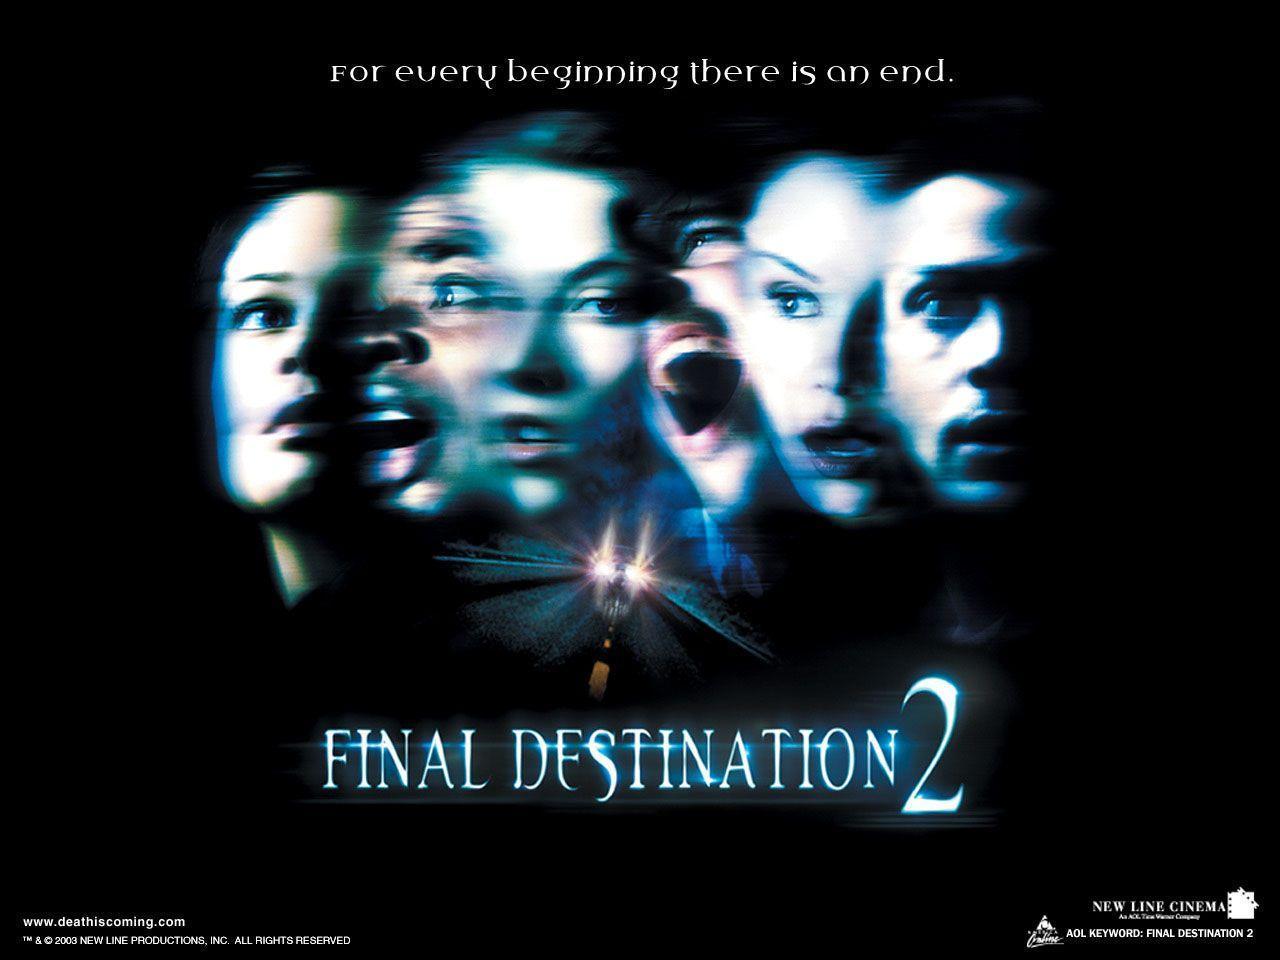 The Final Destination Movie Wallpaper